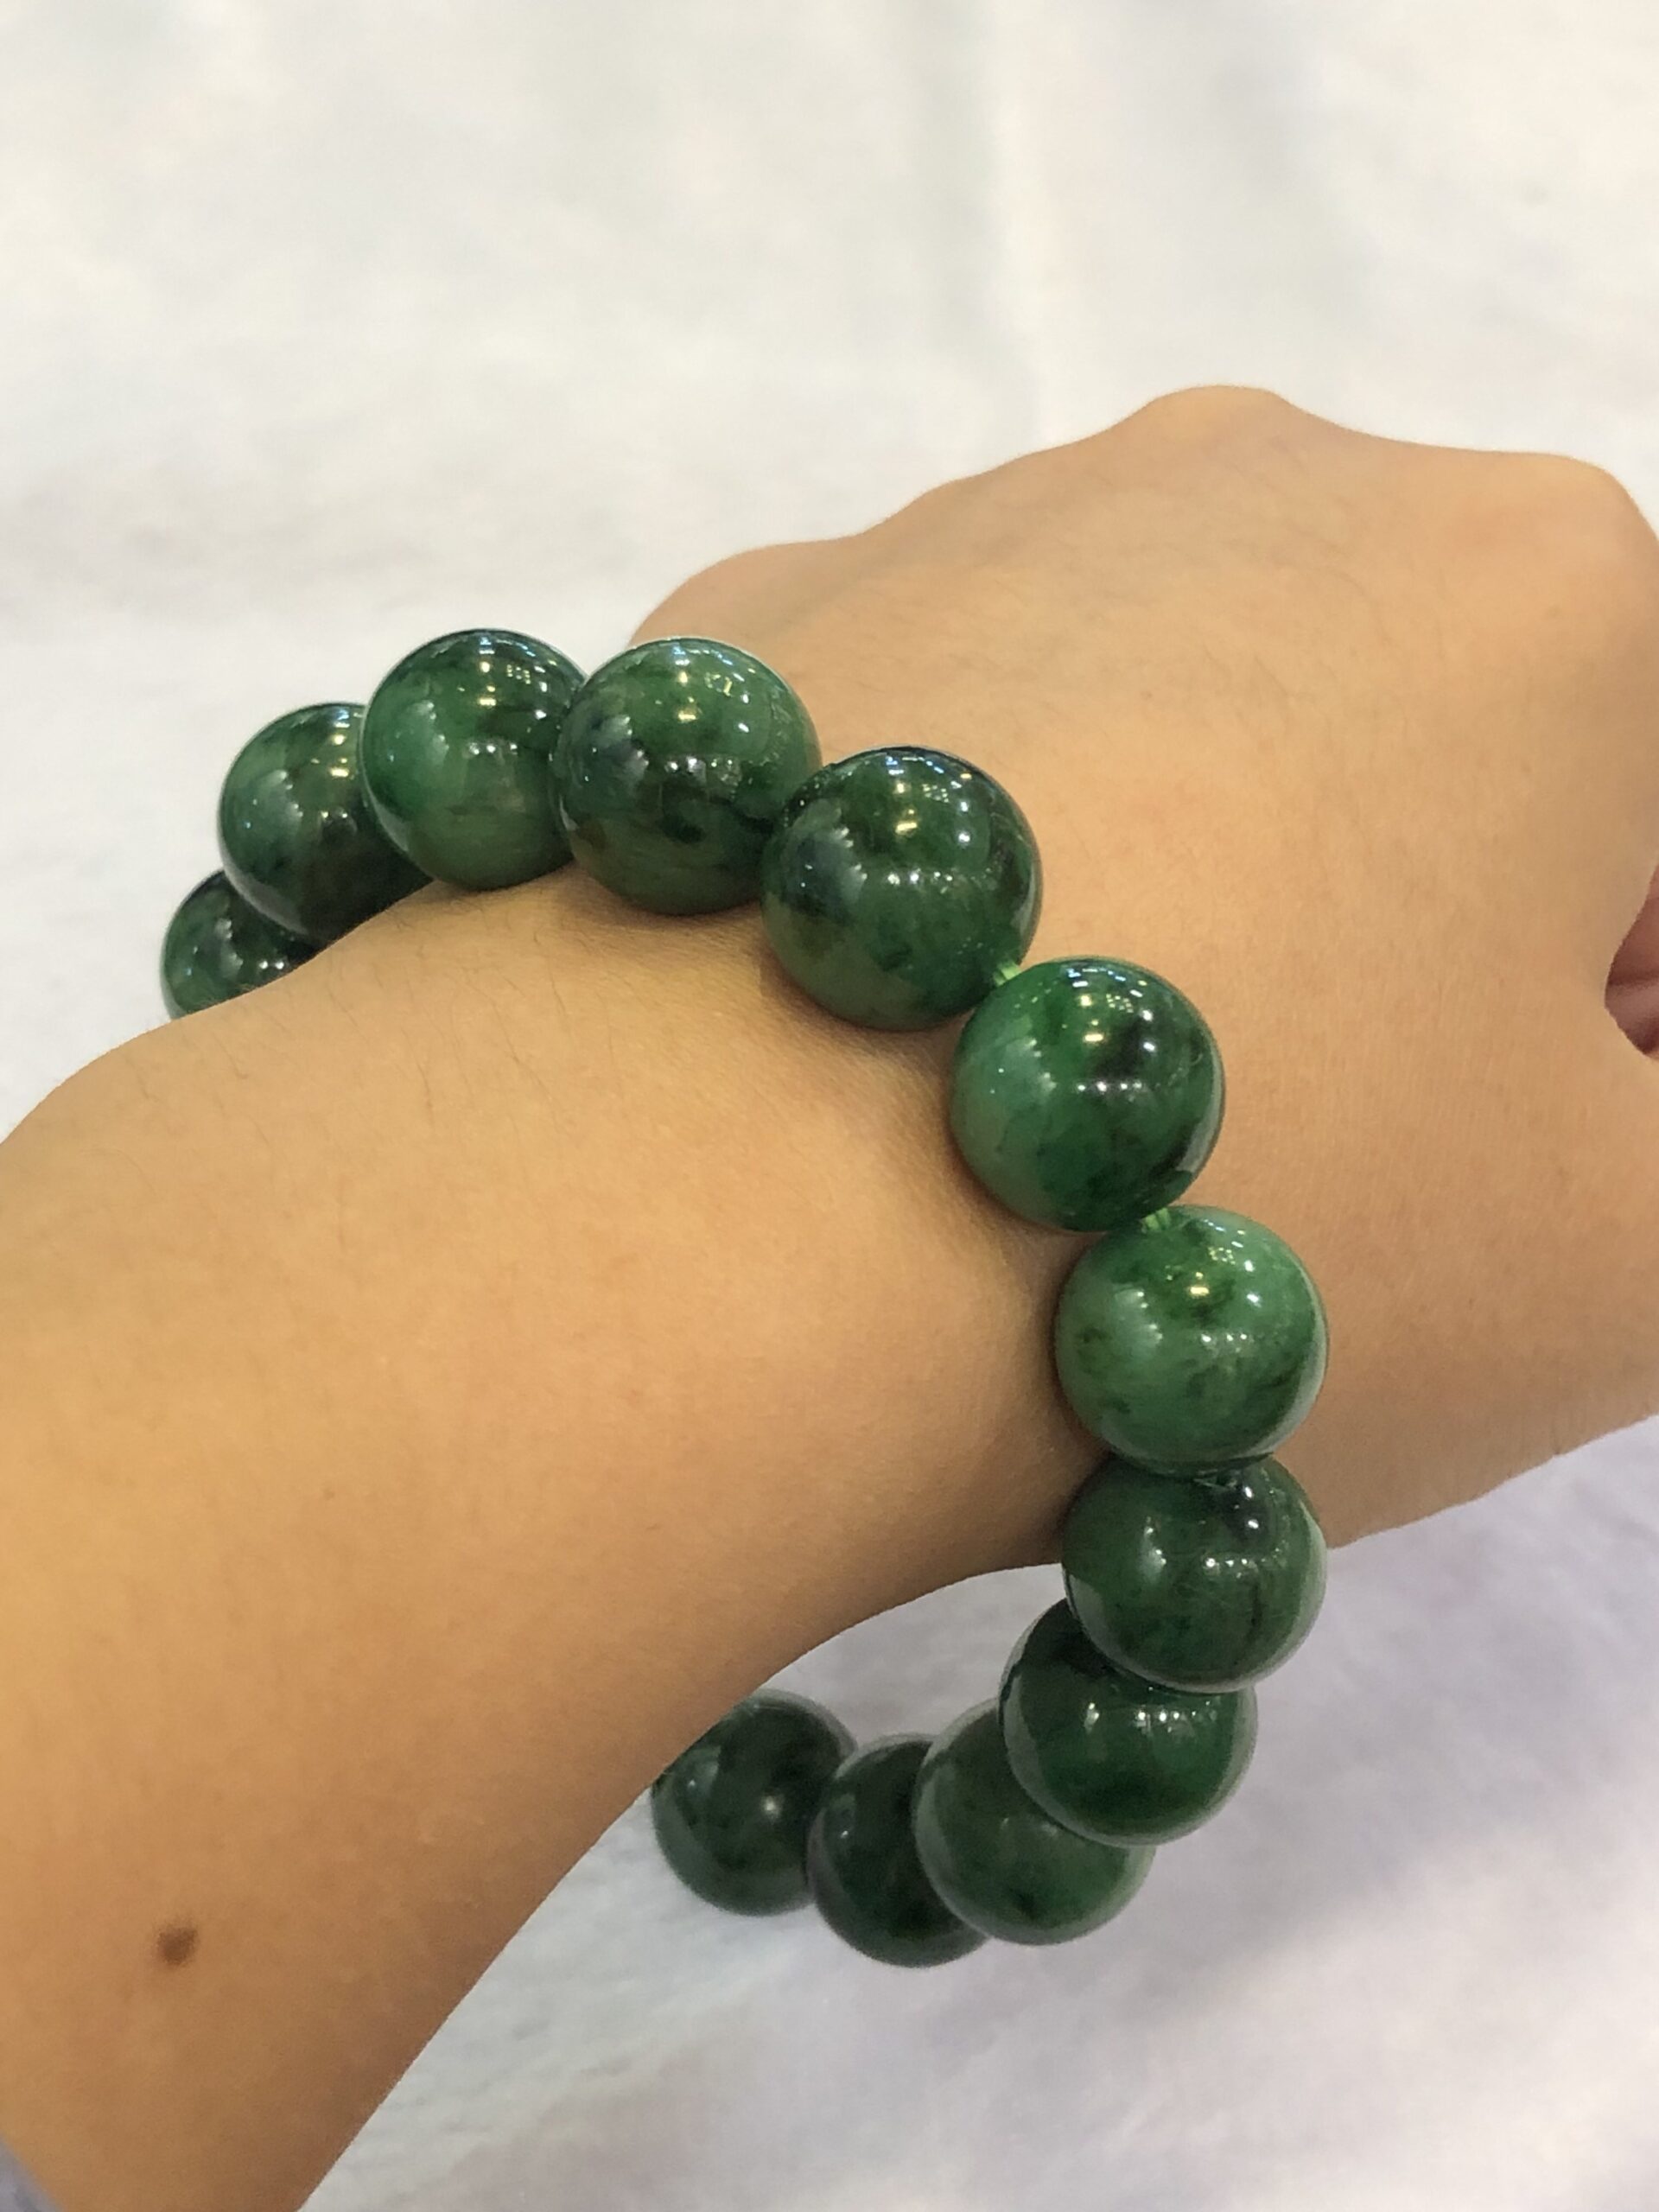 Jade Bracelet Meaning: Bringer of Wealth, Health, and Protection